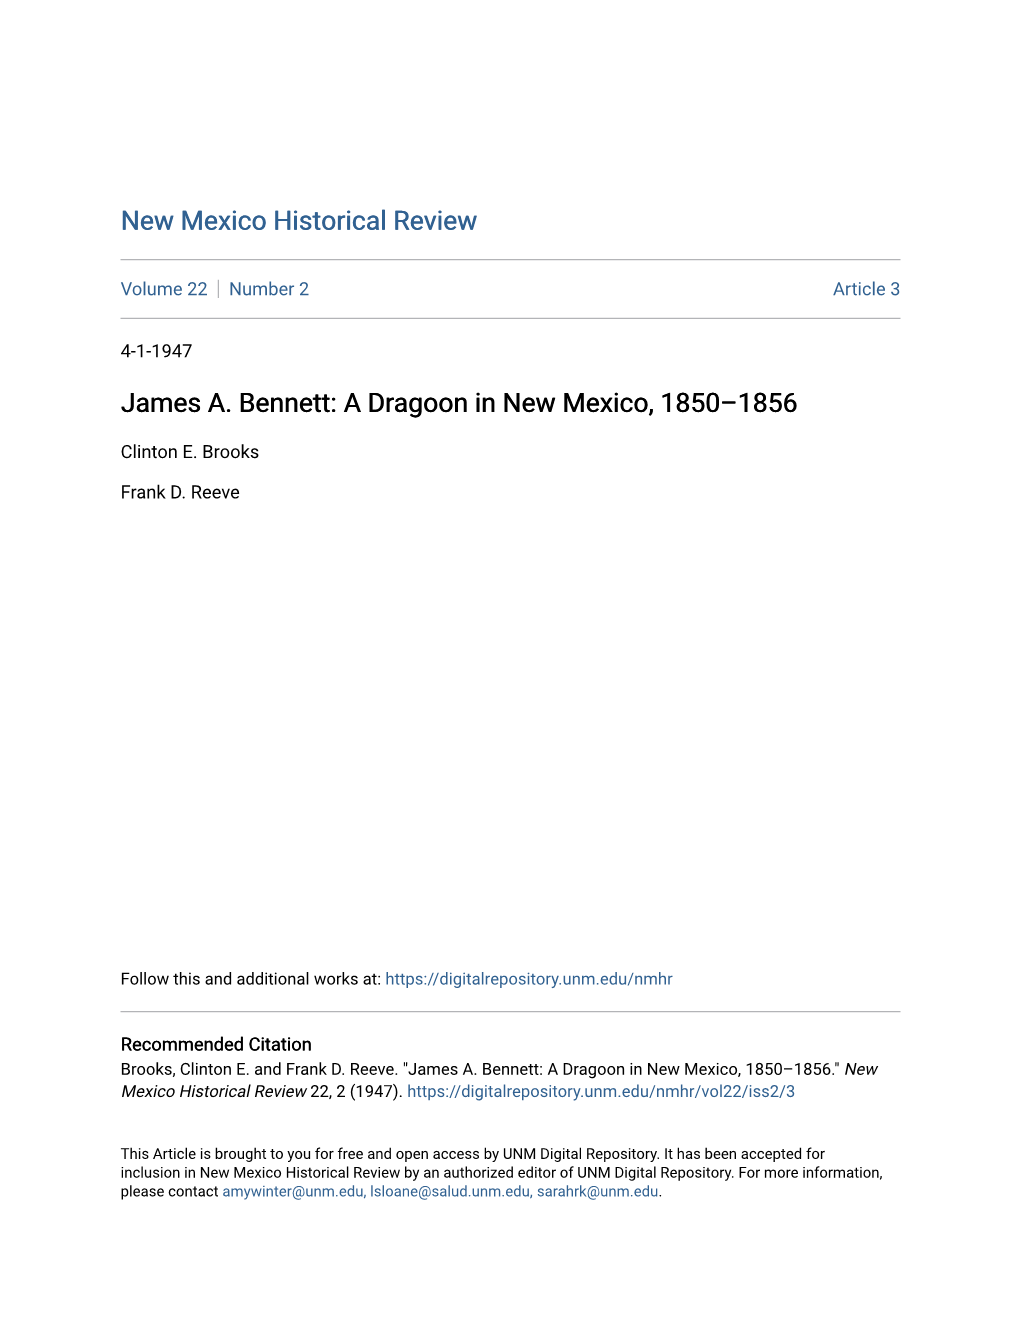 James A. Bennett: a Dragoon in New Mexico, 1850Â•Fi1856